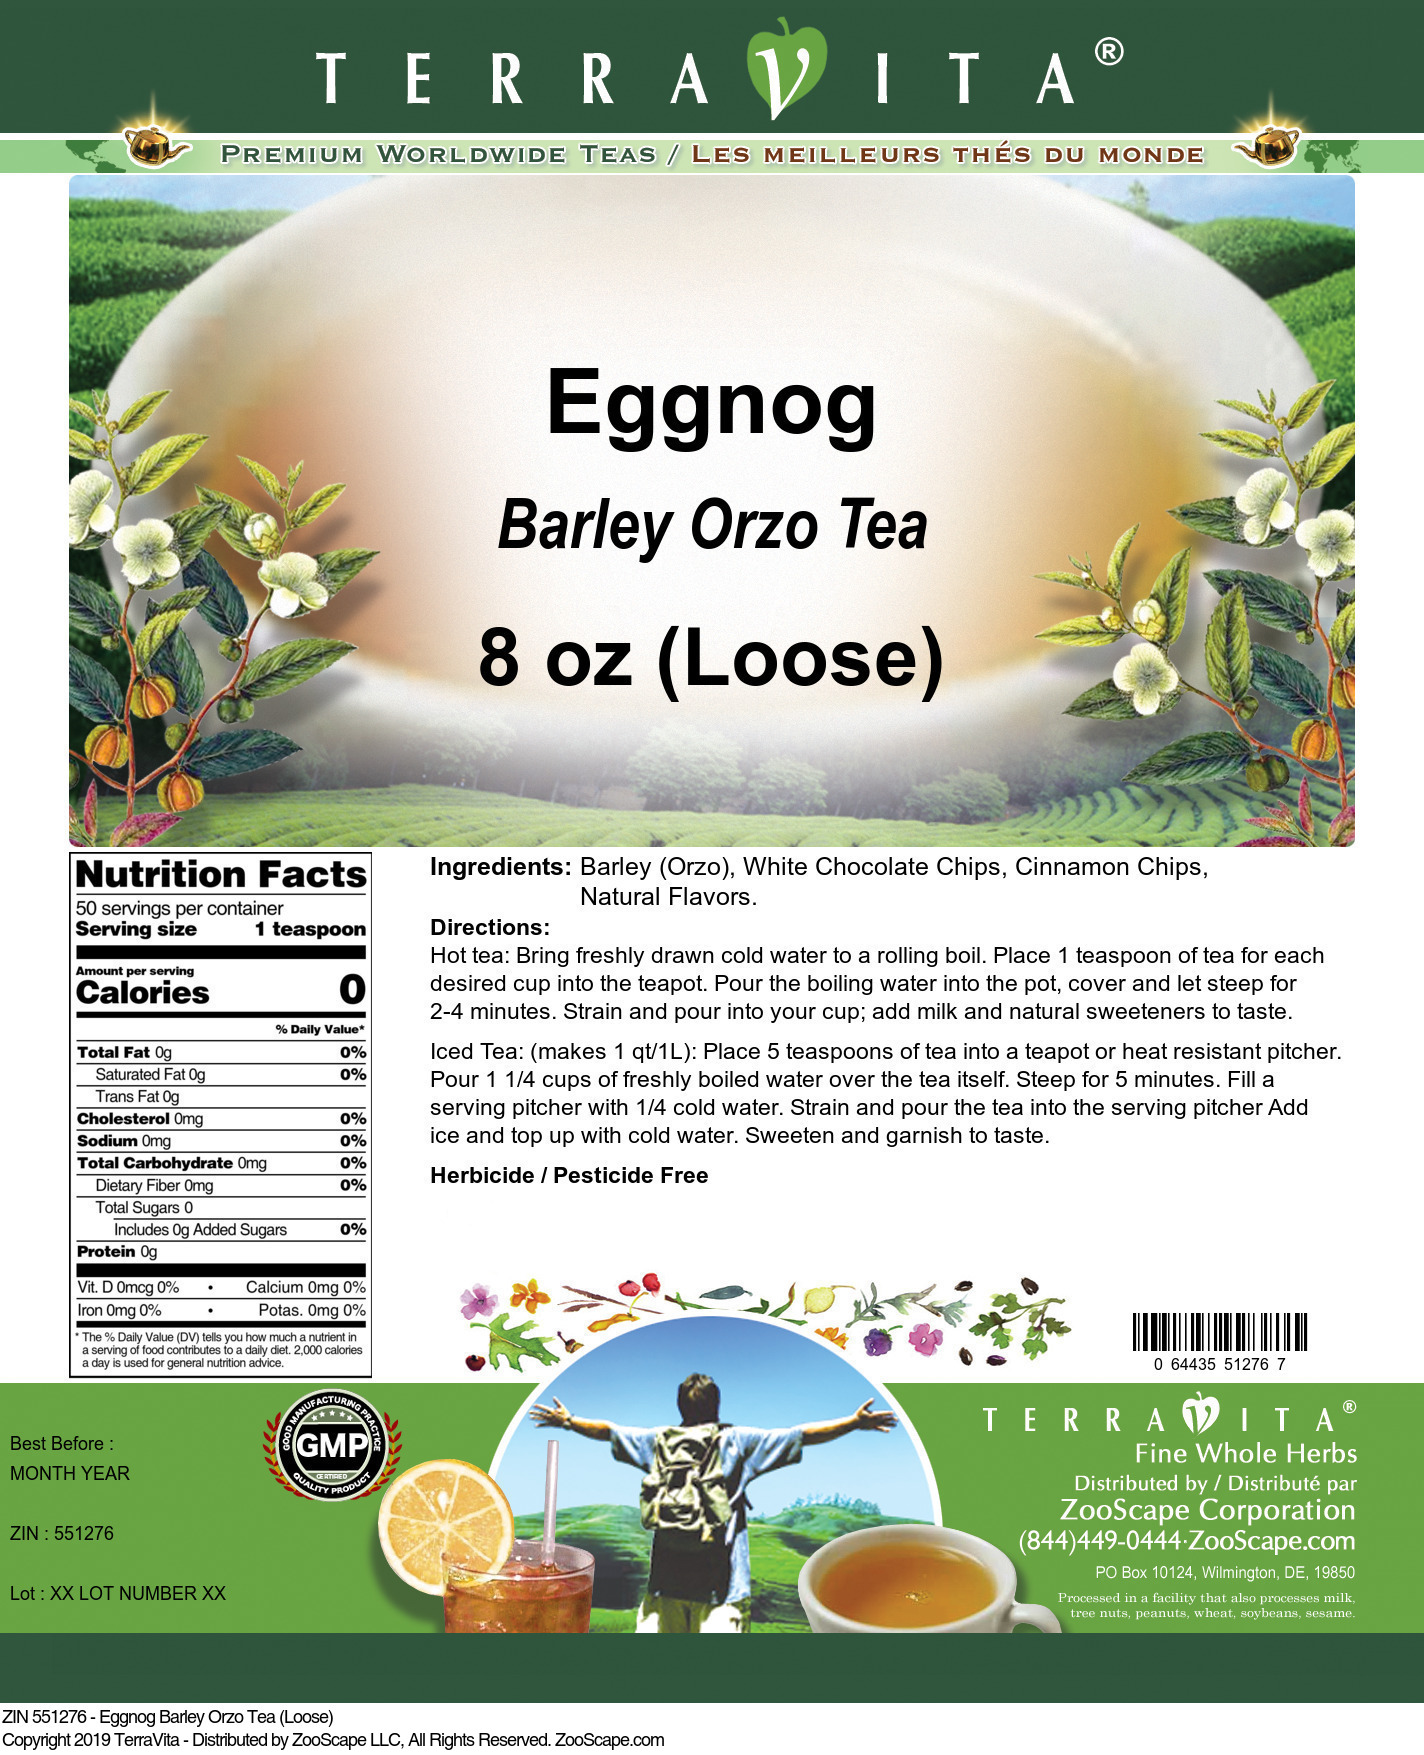 Eggnog Barley Orzo Tea (Loose) - Label